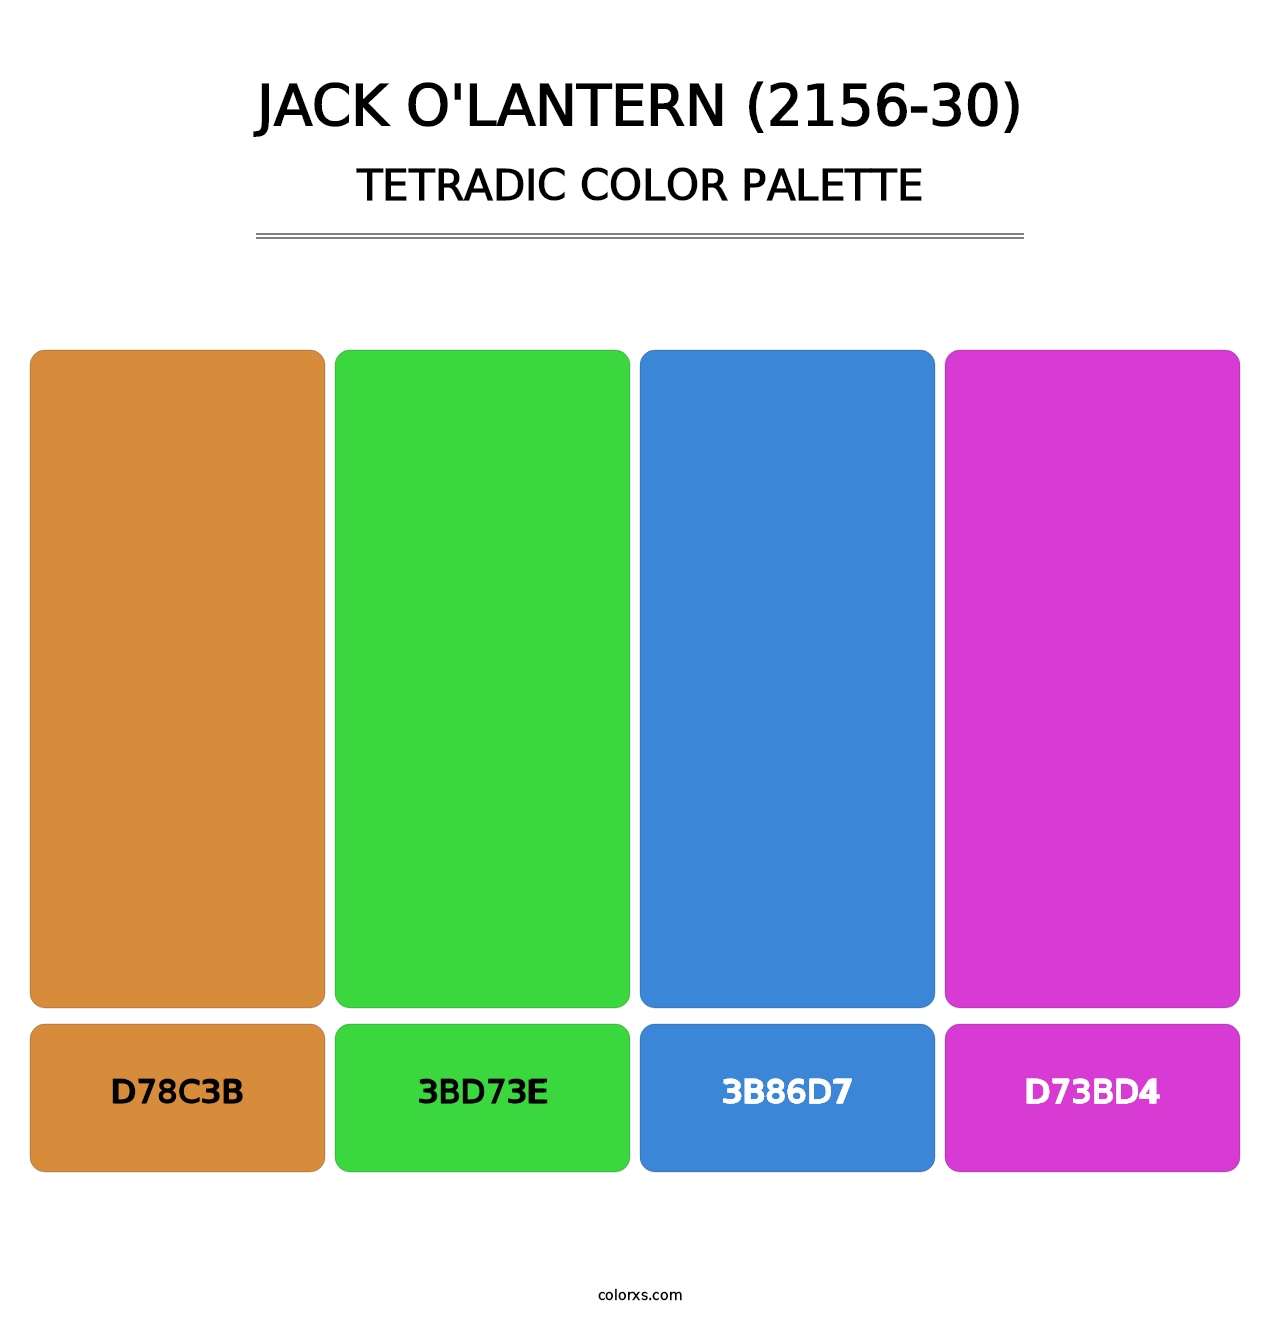 Jack O'Lantern (2156-30) - Tetradic Color Palette